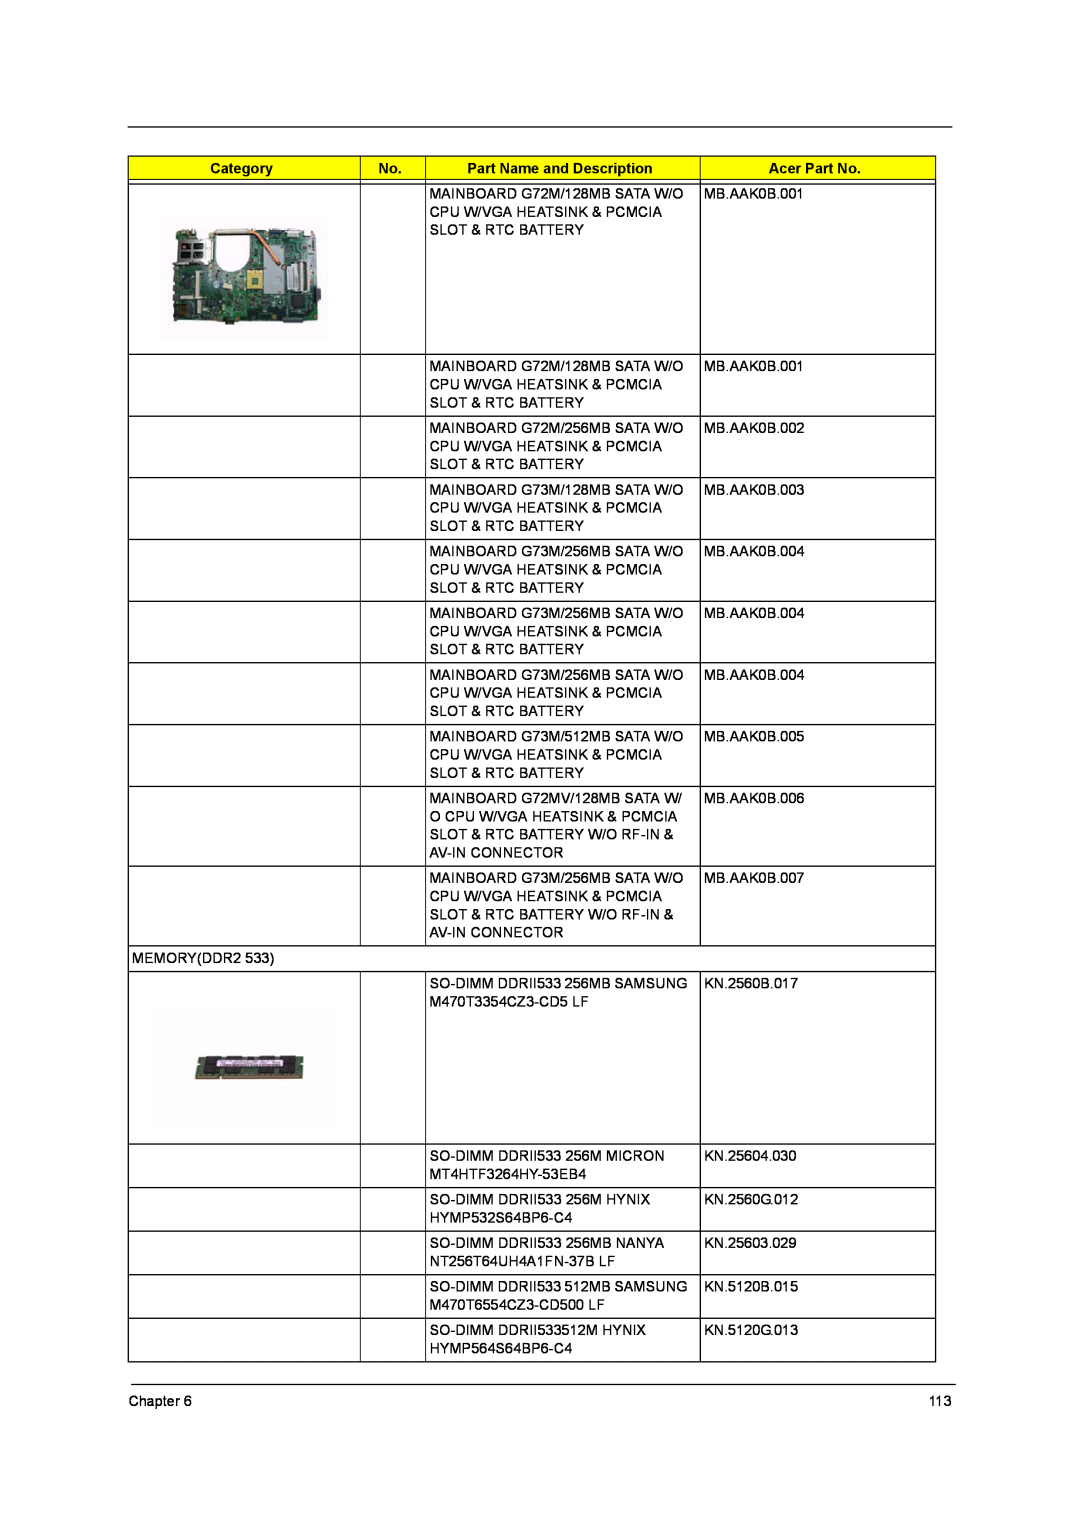 Acer 9800 manual Category, Part Name and Description, Acer Part No 